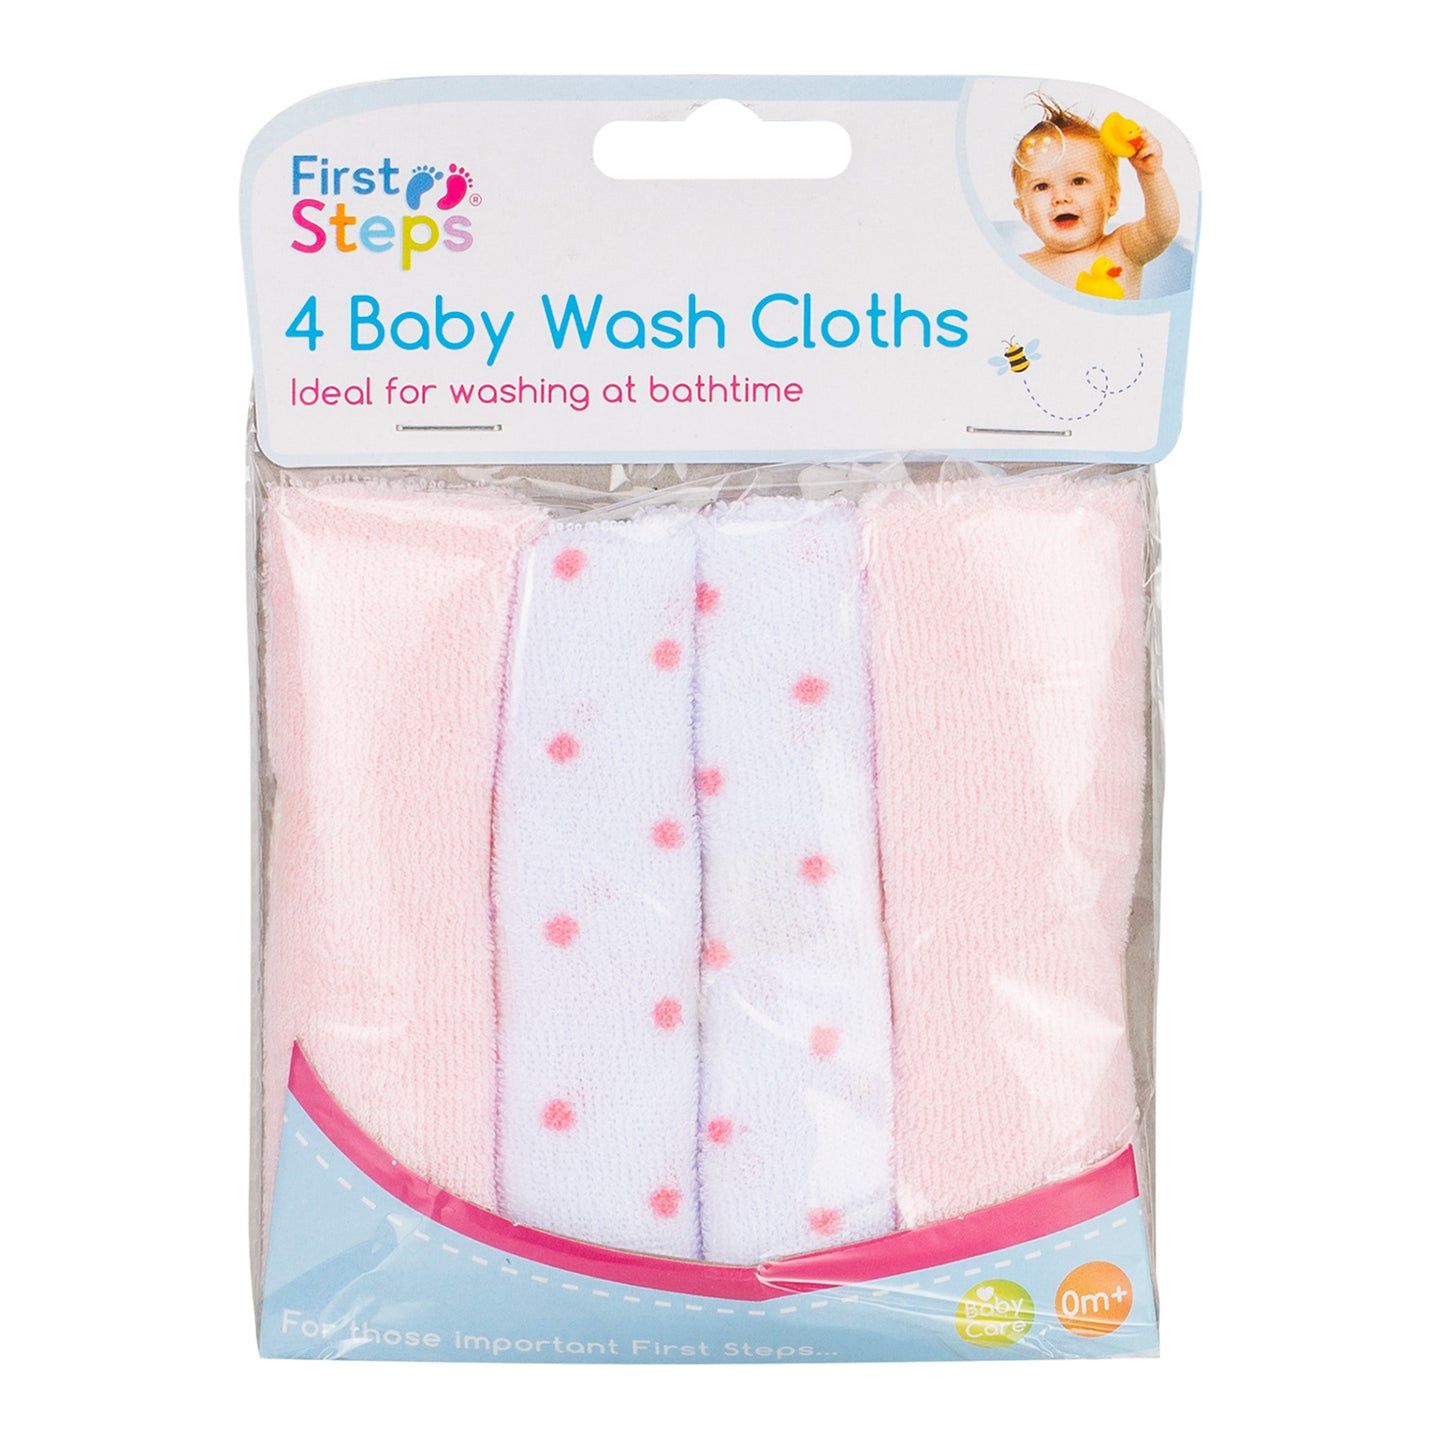 Baby wash cloths.